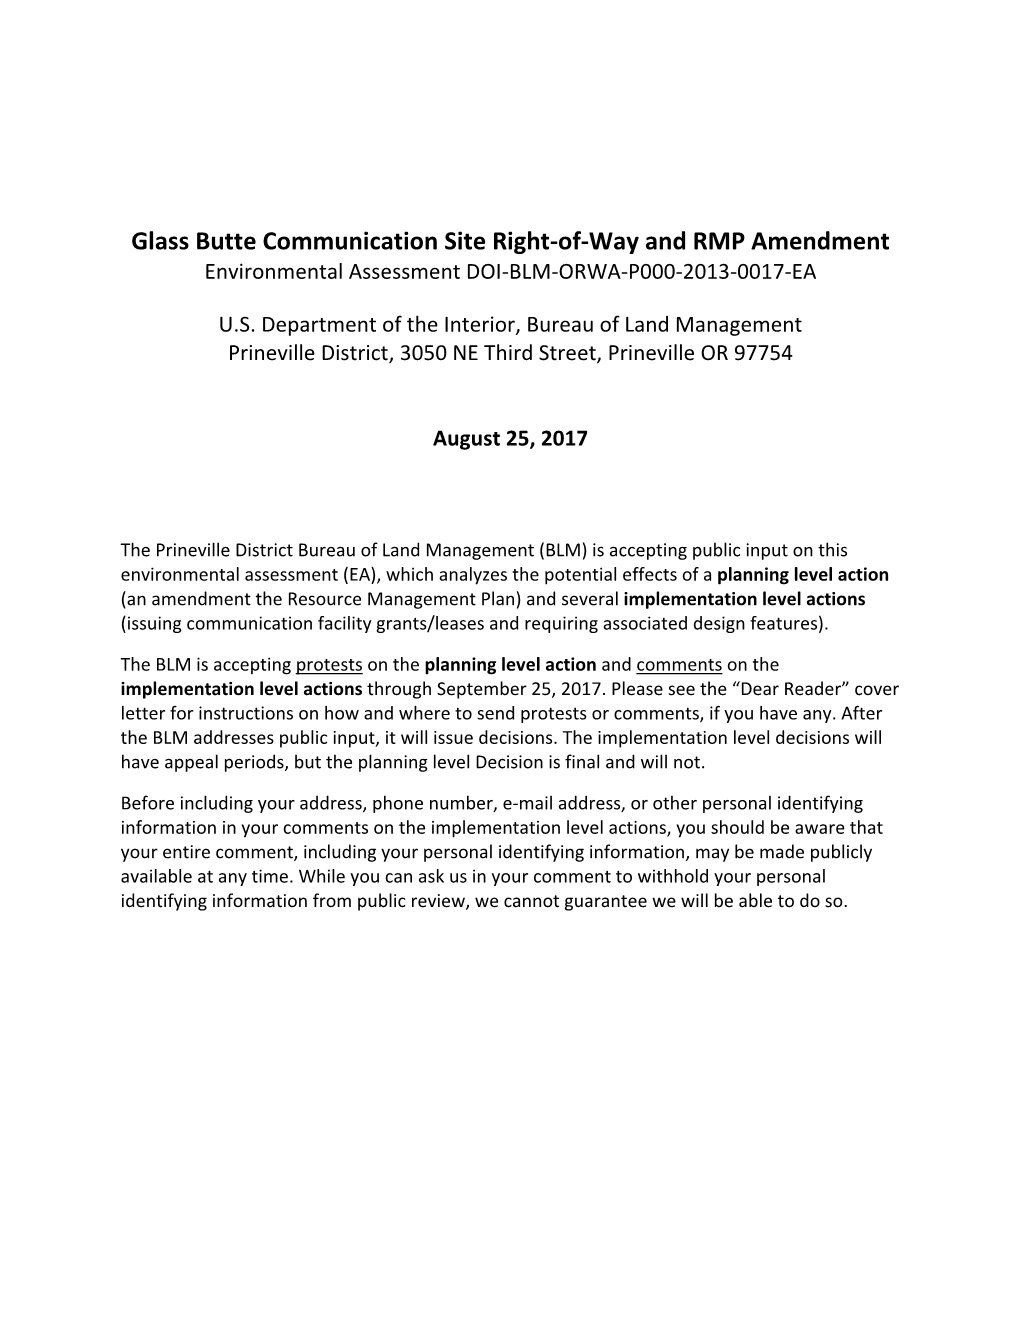 Glass Butte Communication Site Right-Of-Way and RMP Amendment Environmental Assessment DOI-BLM-ORWA-P000-2013-0017-EA